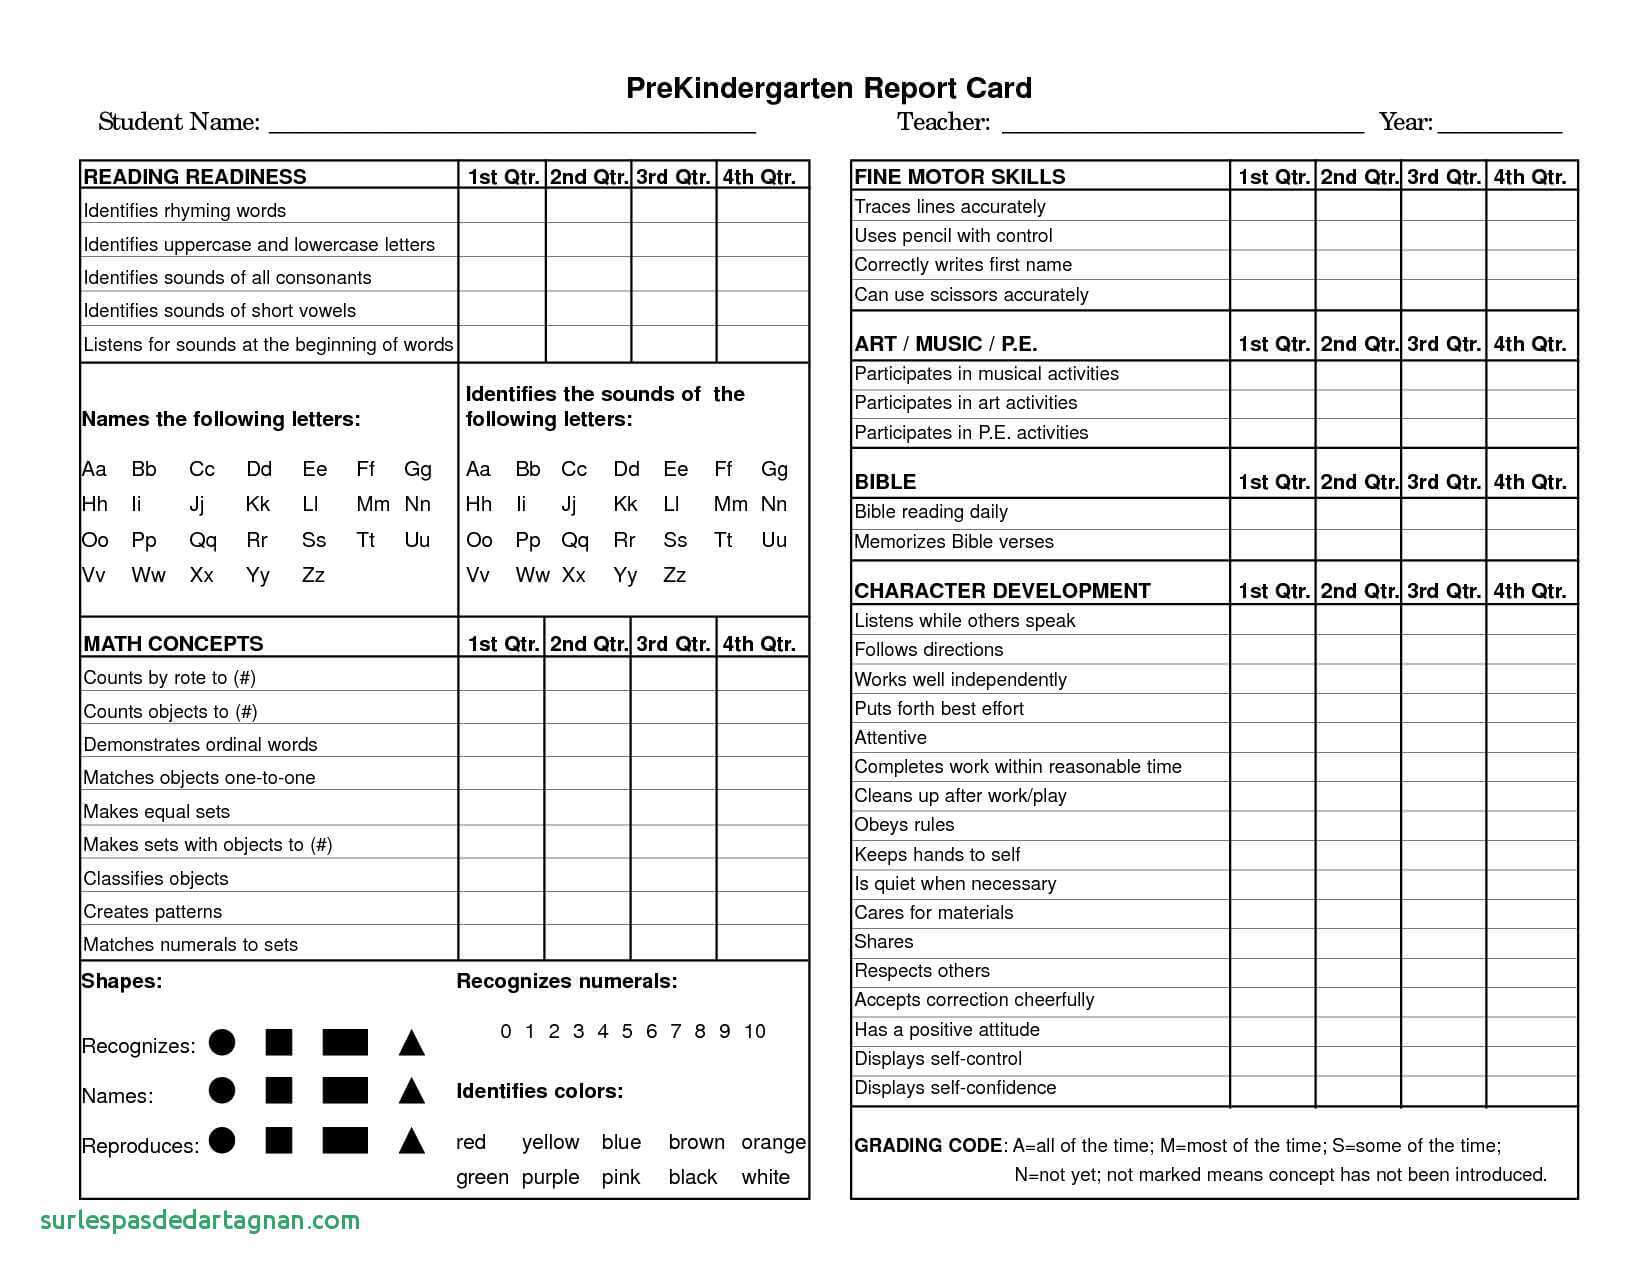 12 Progress Report Example For Students | Proposal Resume In Preschool Weekly Report Template